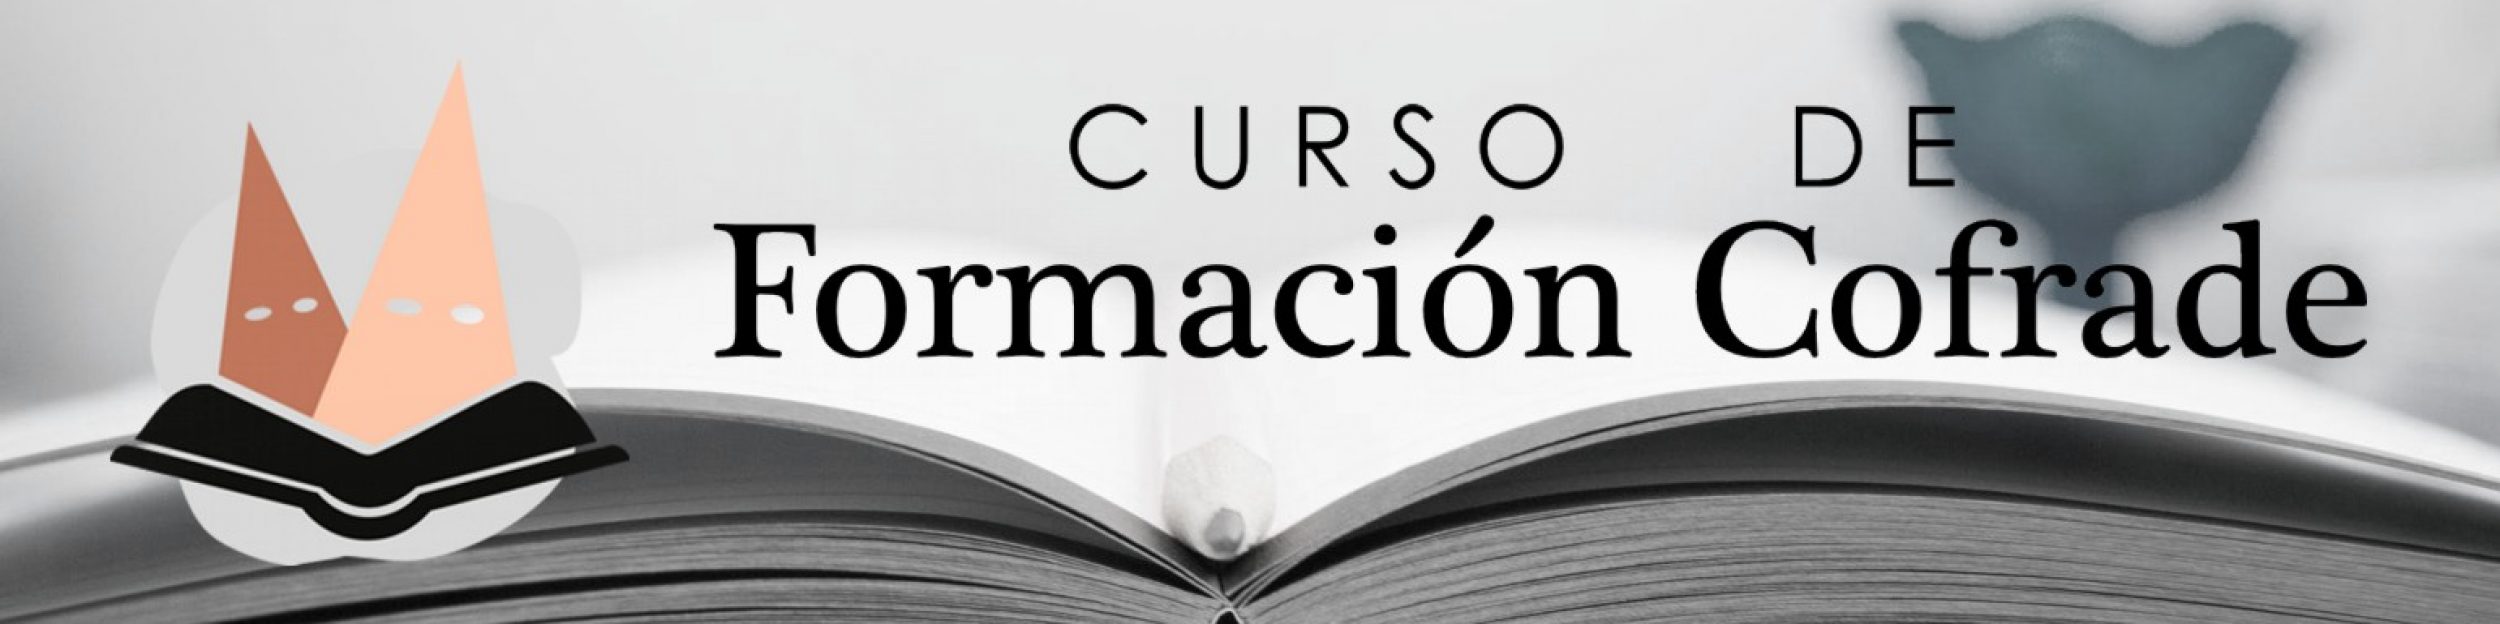 CURSO DE FORMACION COFRADE